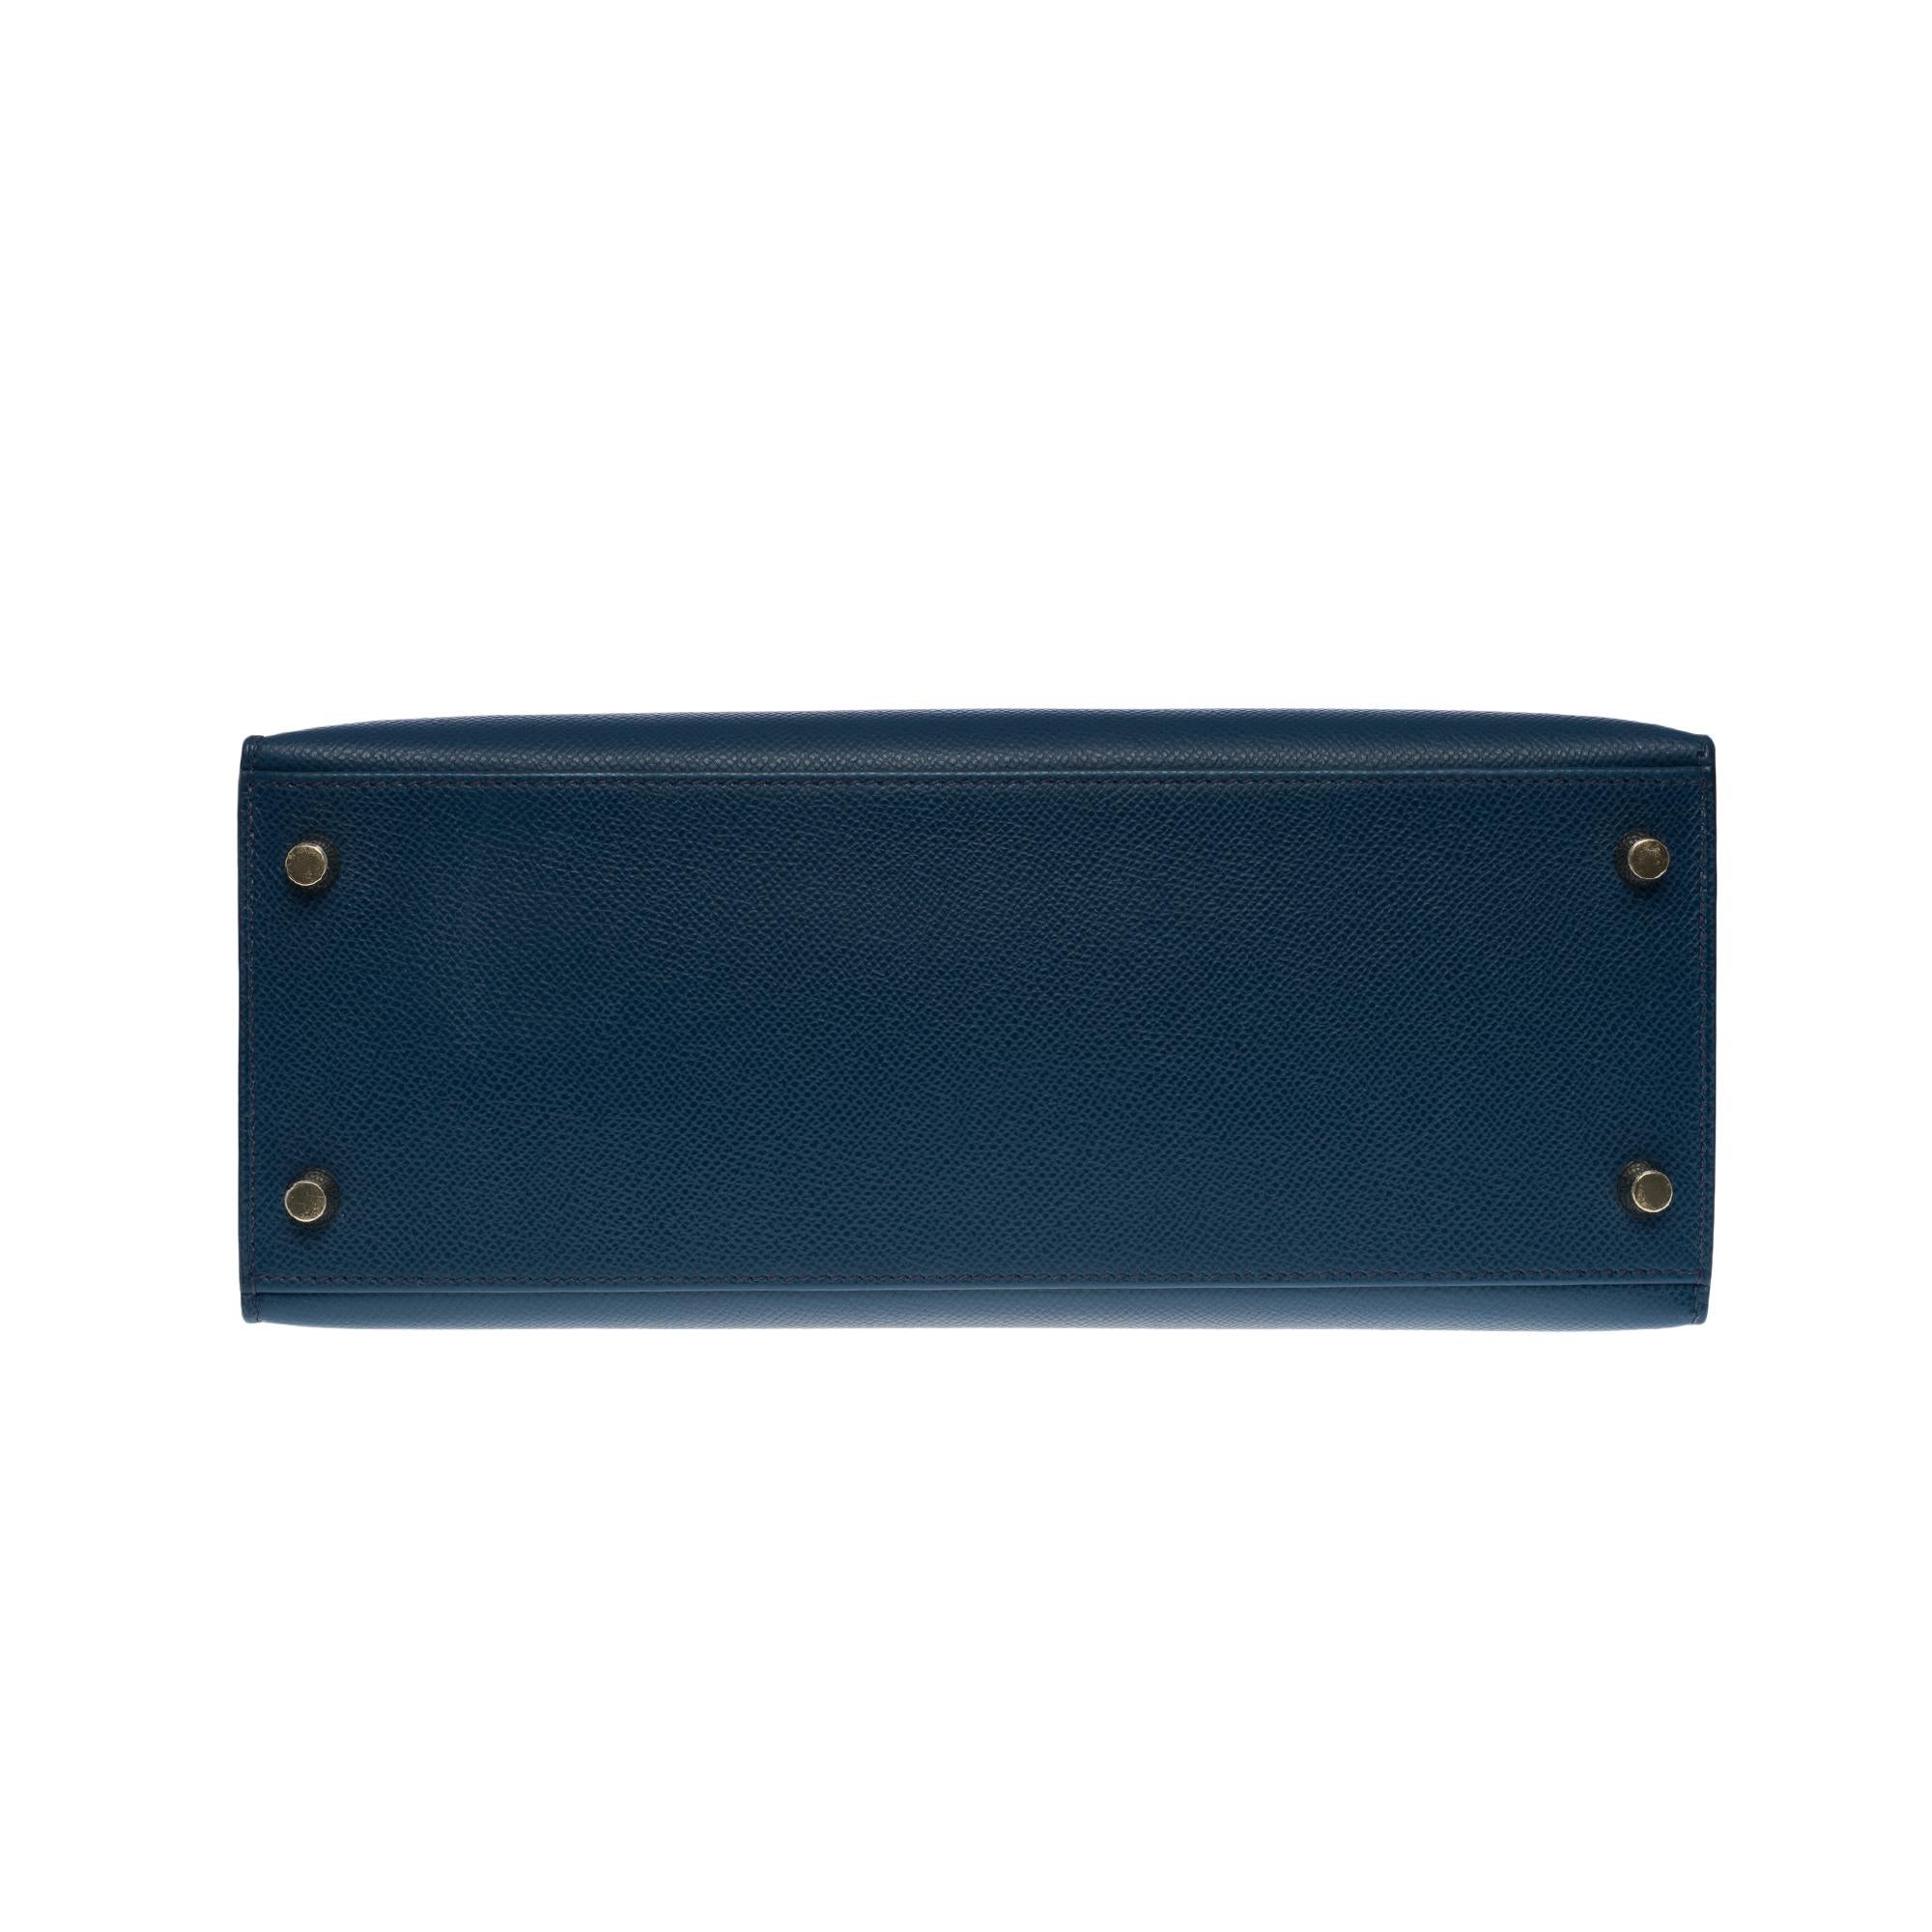 New Hermès Kelly 28 sellier handbag strap in Prussian blue Epsom leather, GHW 6